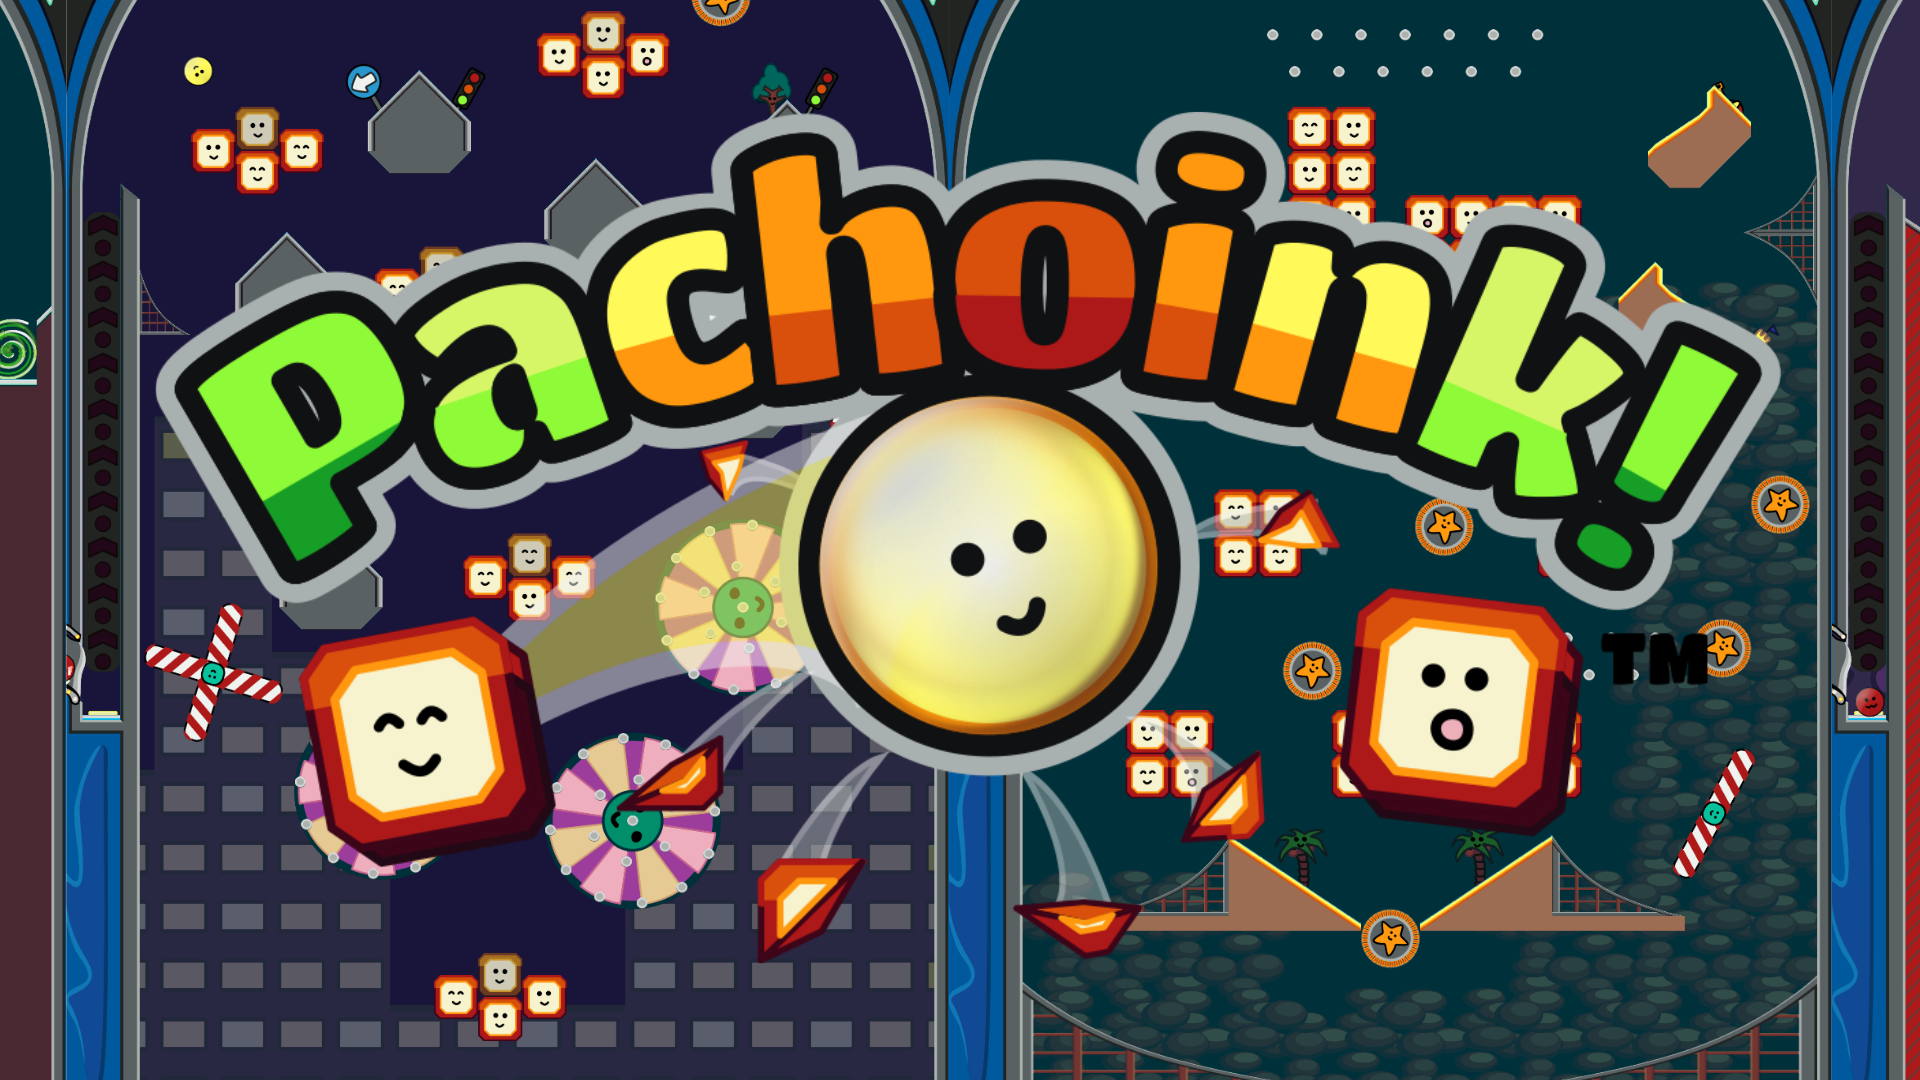 Pachoink! Alt logo with background